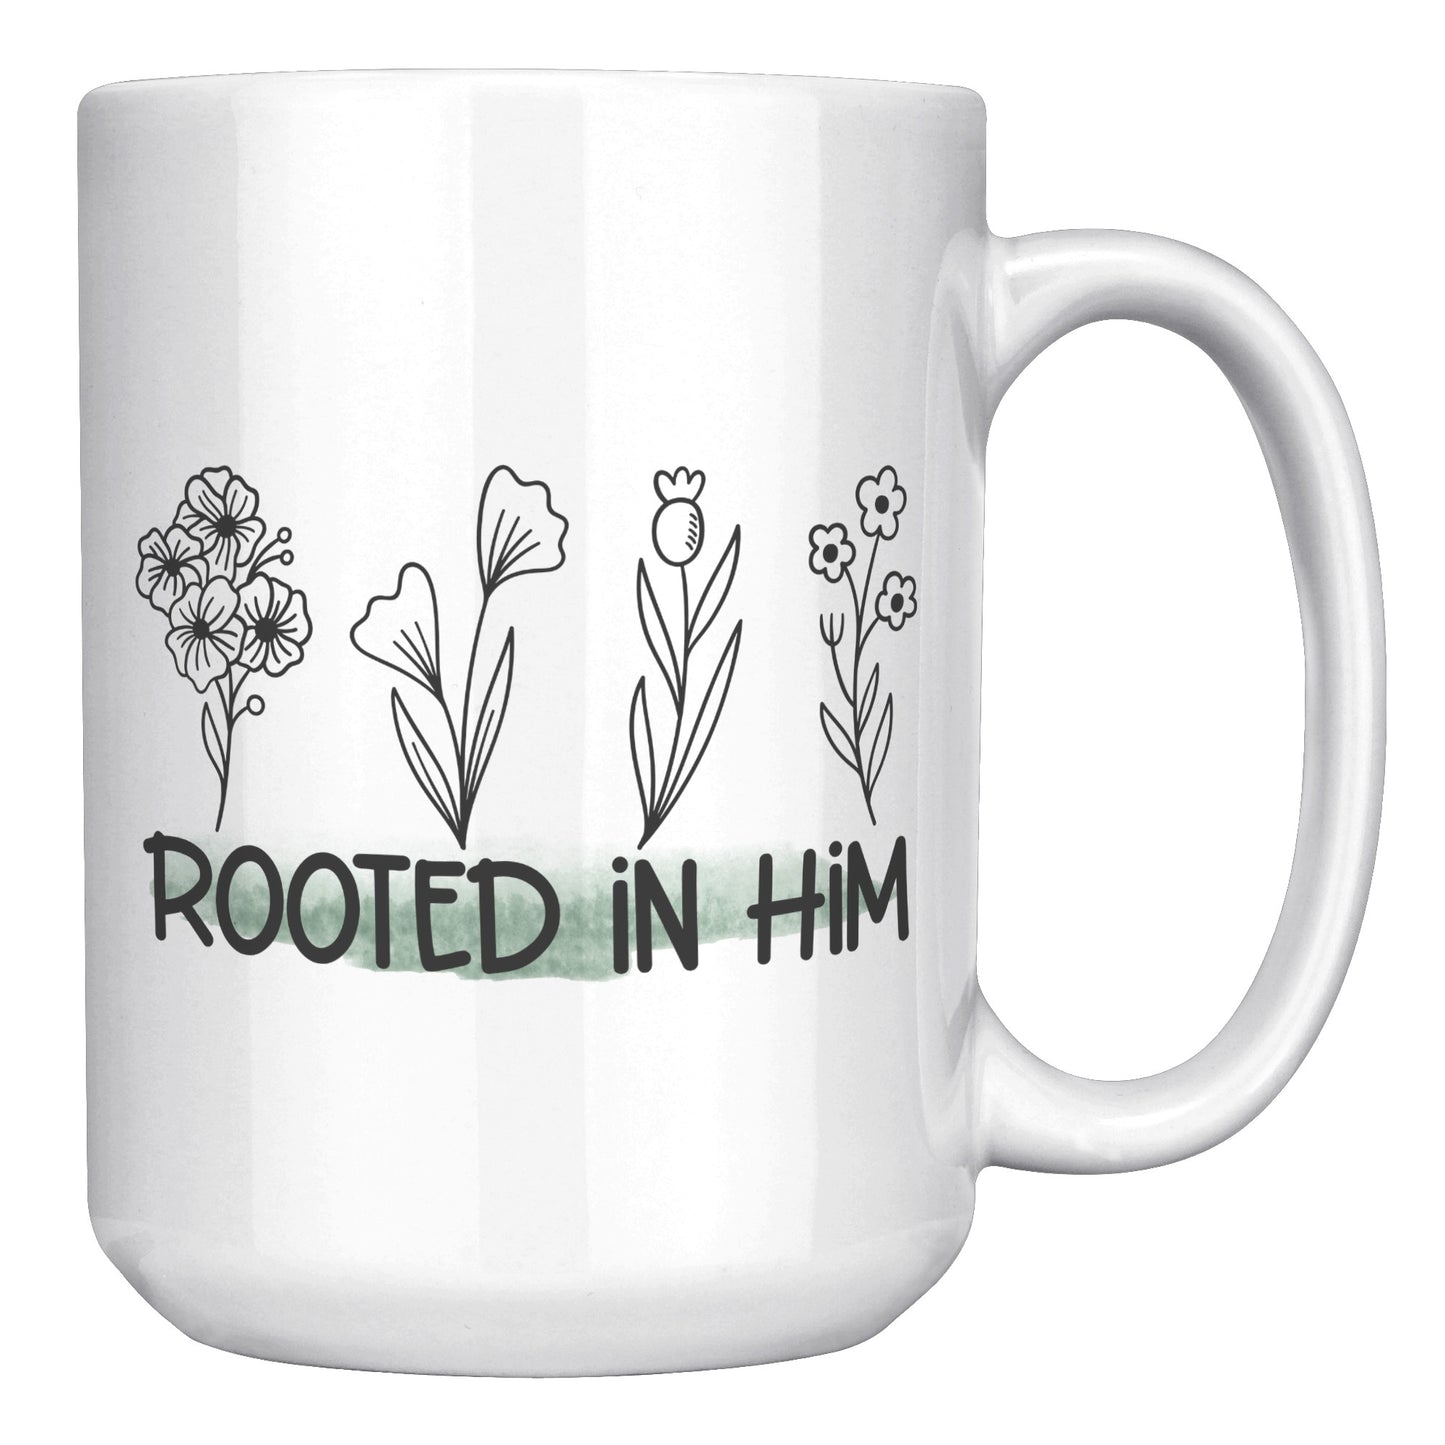 Rooted in Him 15 oz White Ceramic Mug